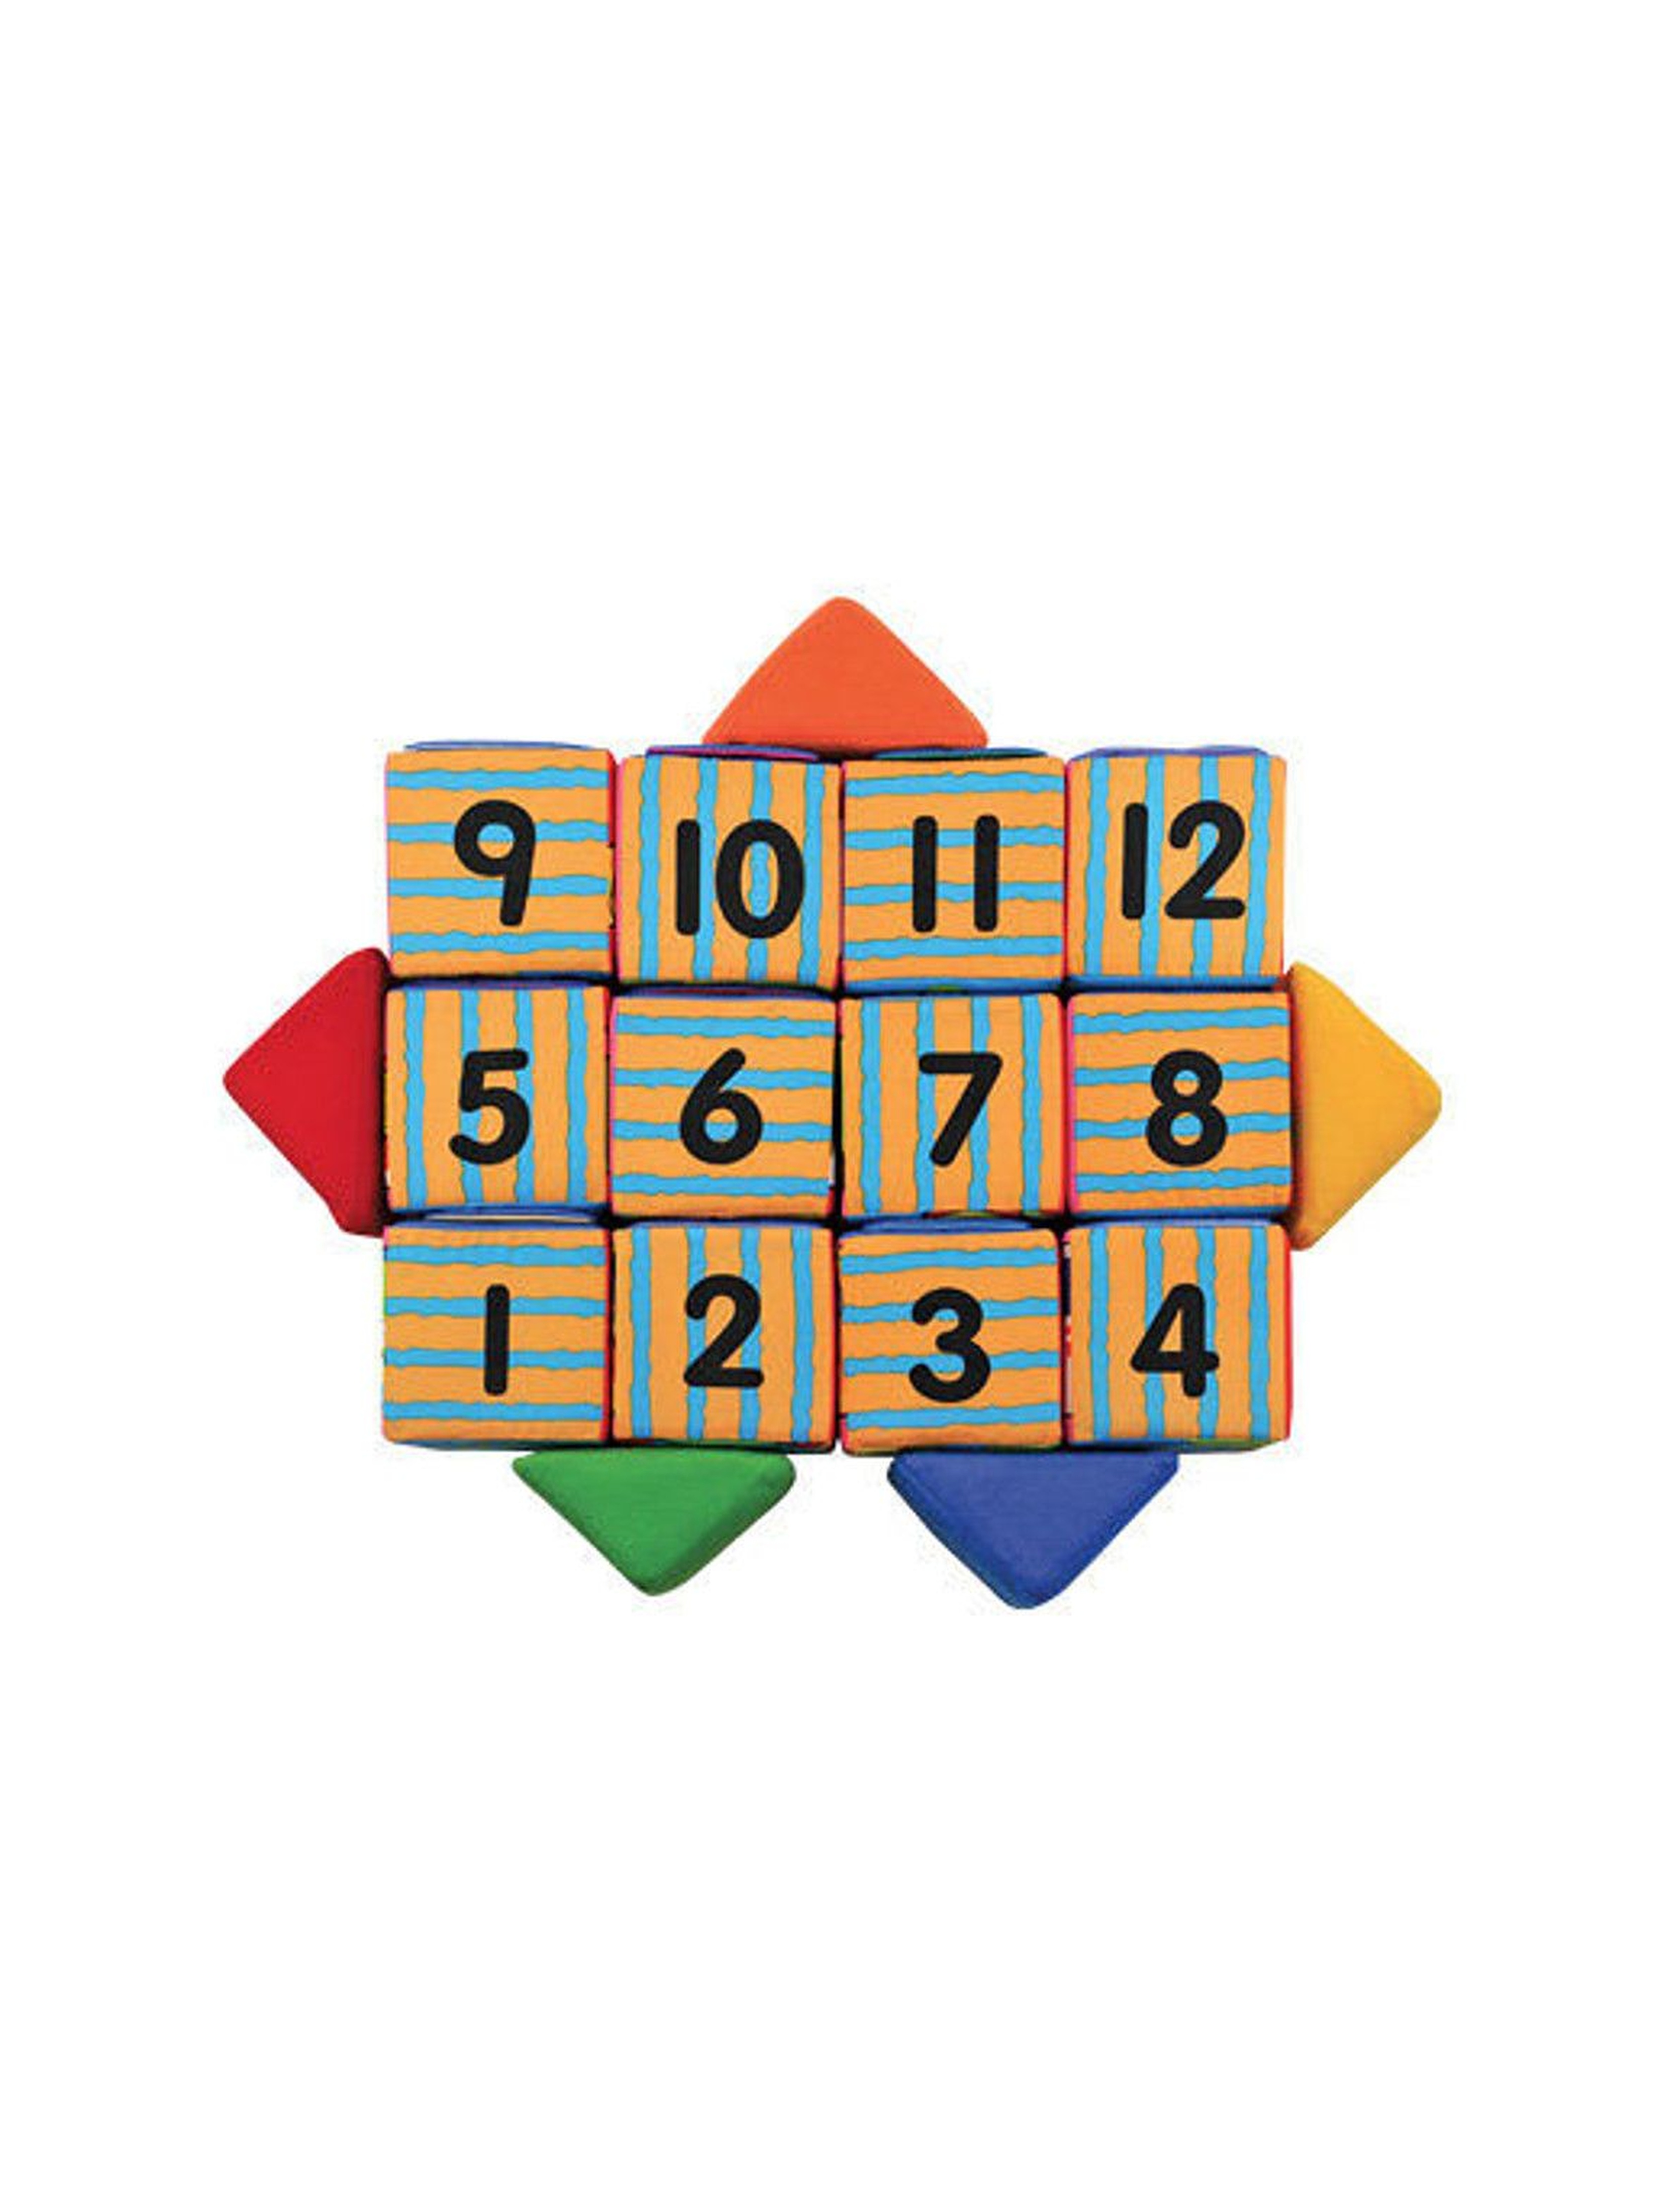 Edukacyjne klocki - puzzle